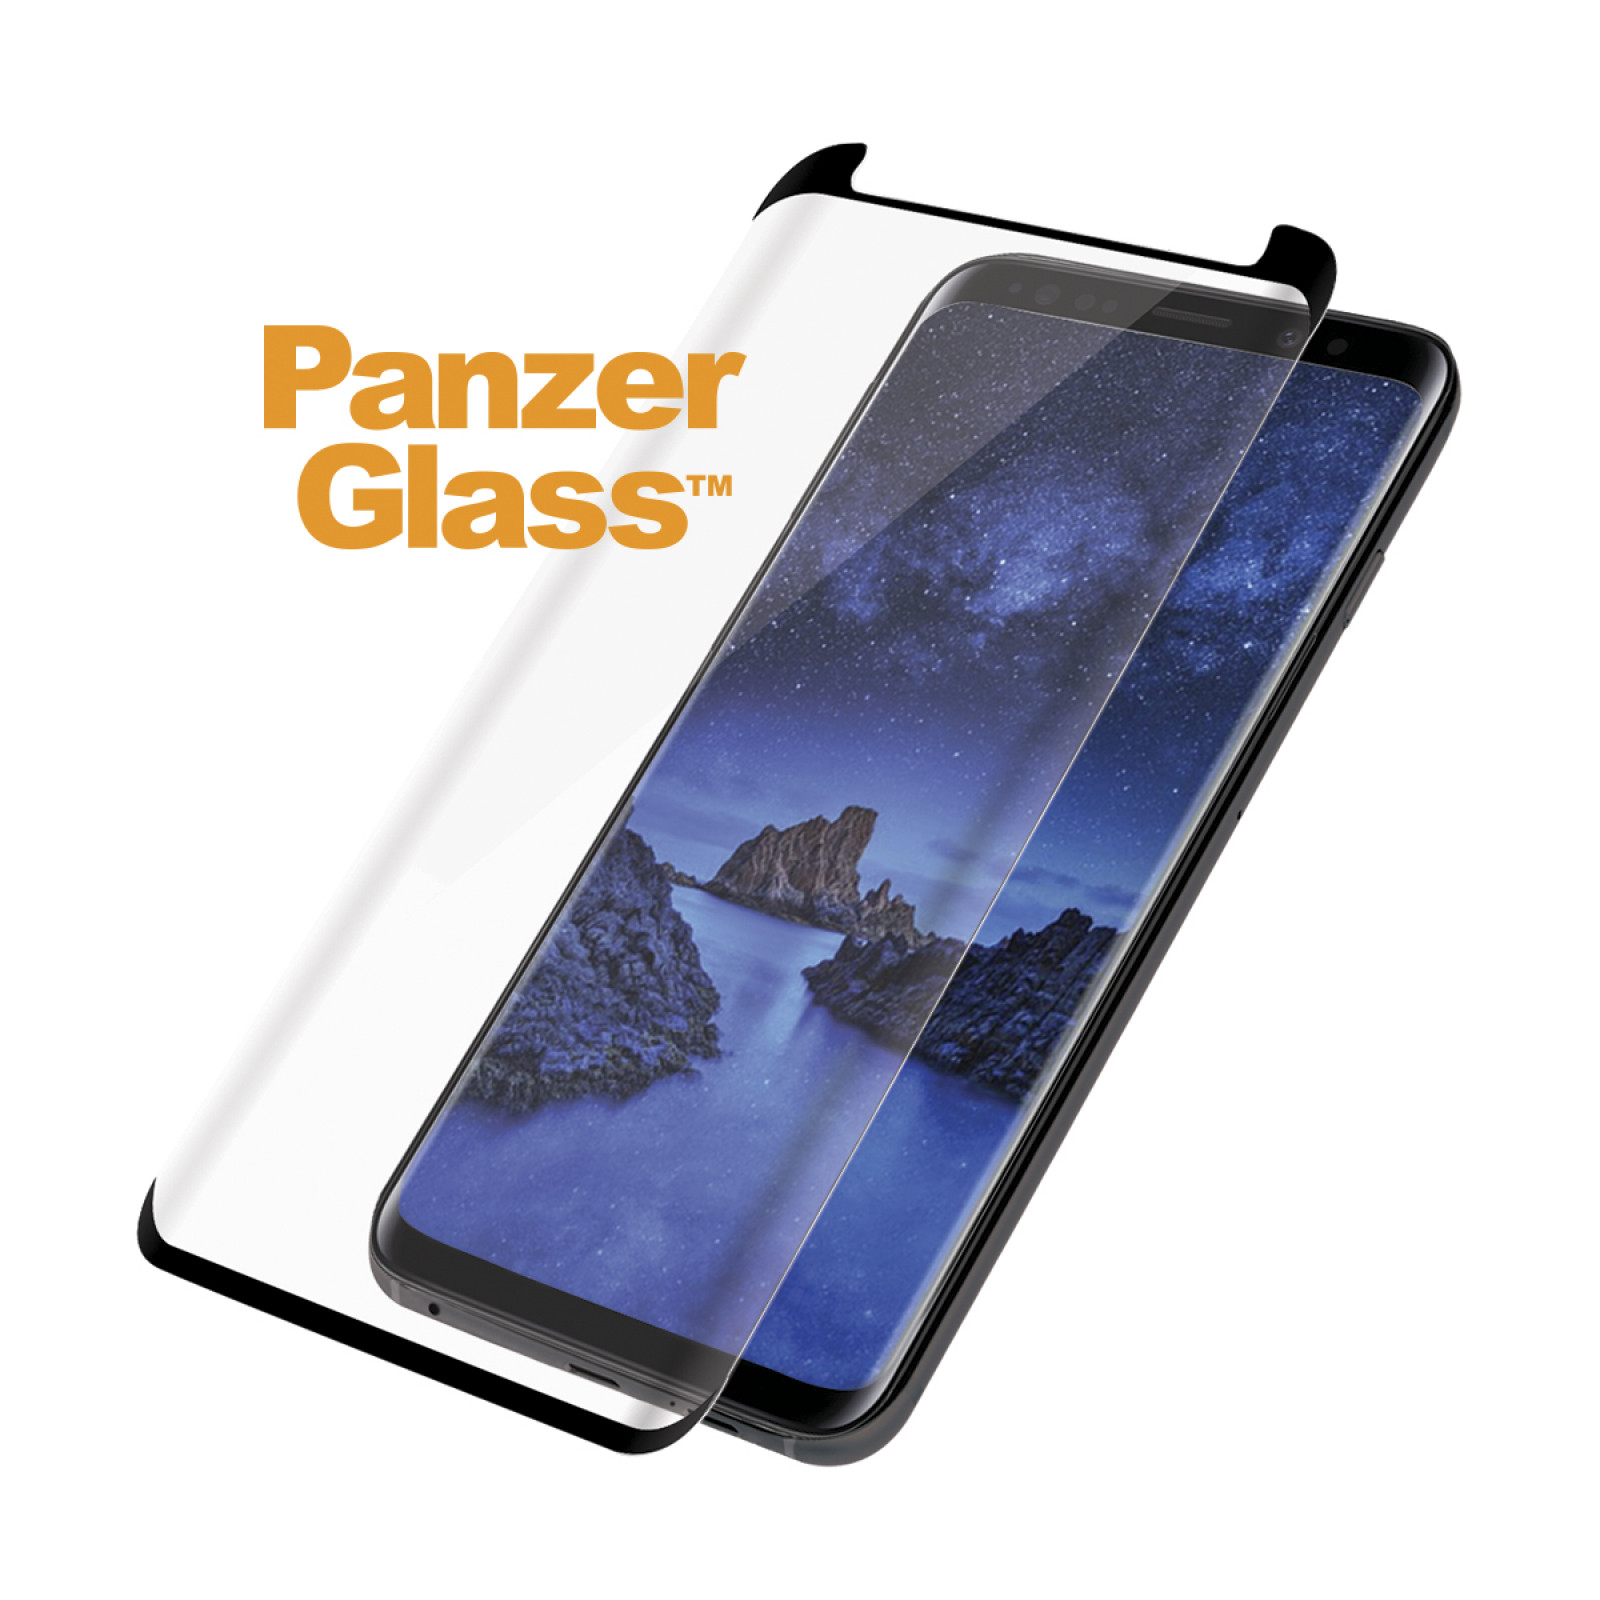 Стъклен протектор PanzerGlass за Samsung Galaxy S9 Case Friendly Черен